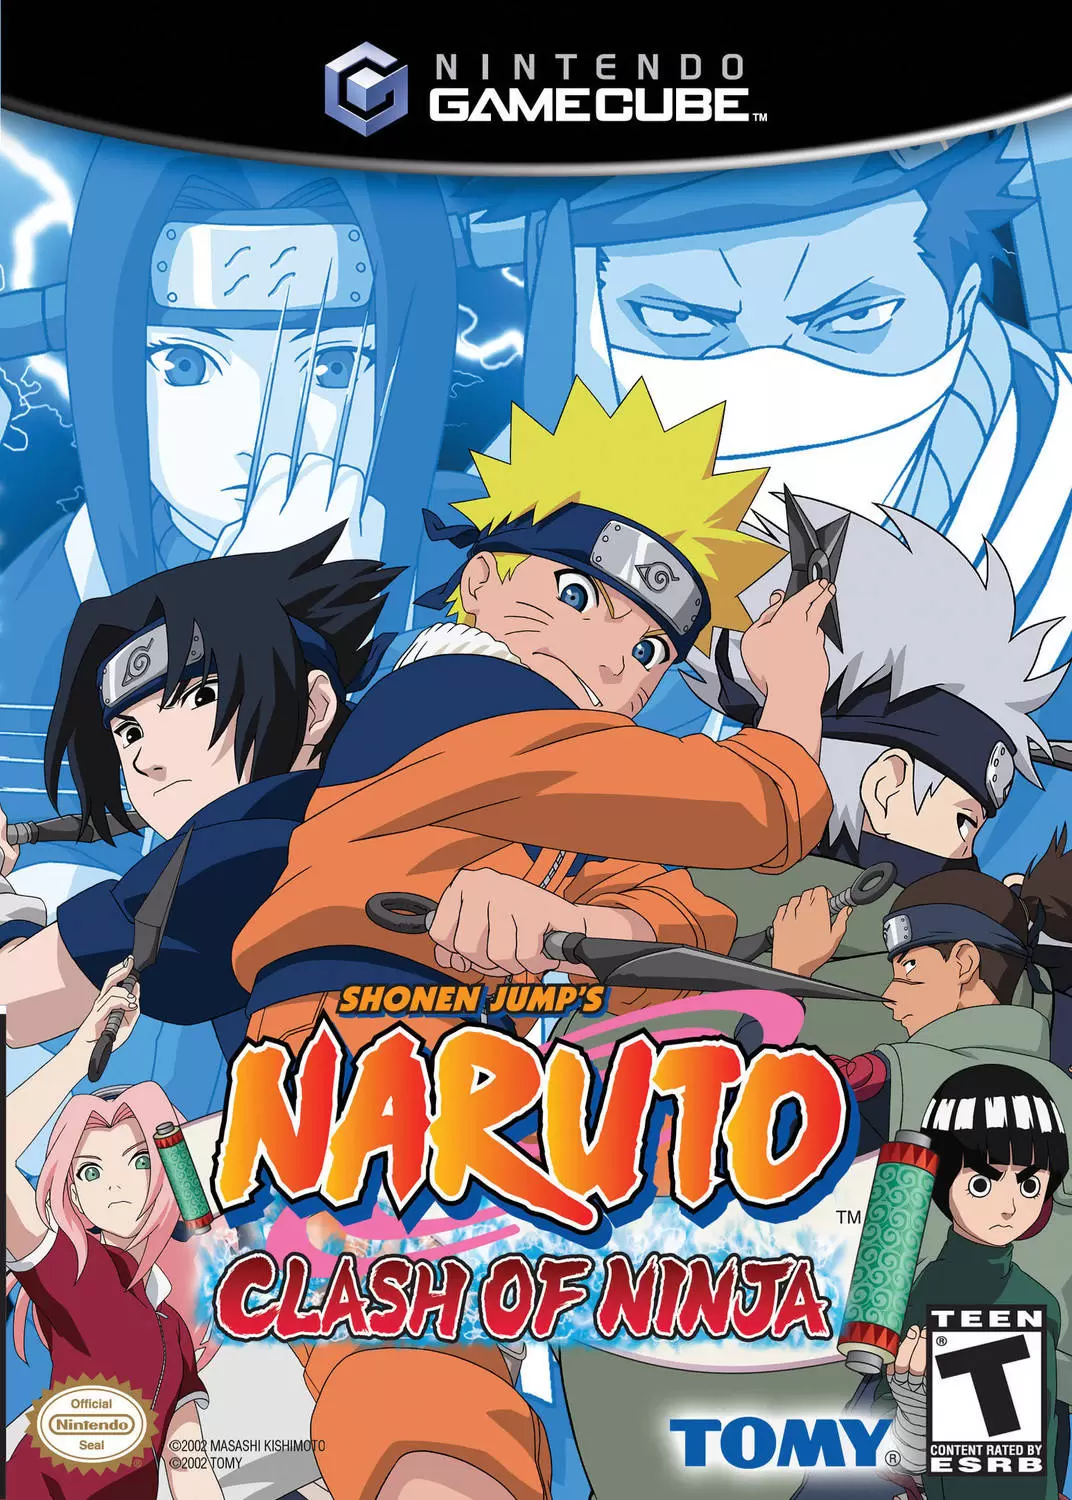 Jeux Gamecube - Naruto: Clash of Ninja